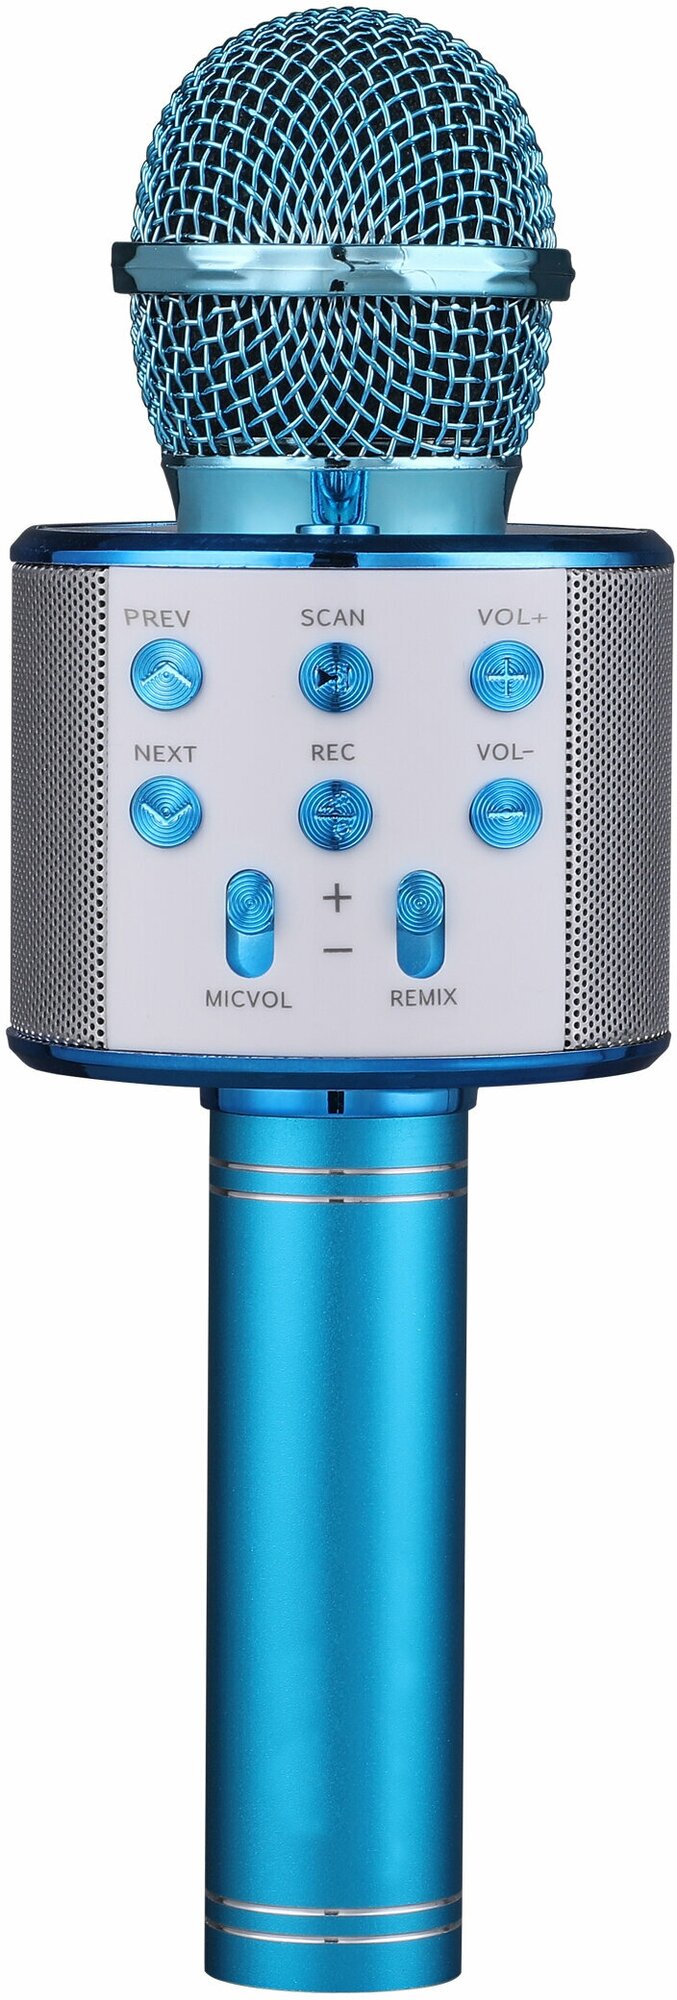 FunAudio G-800 Blue Беспроводной микрофон. Поддержка файлов: MP3, WMA. Bluetooth V4.0 + EDR. 3W